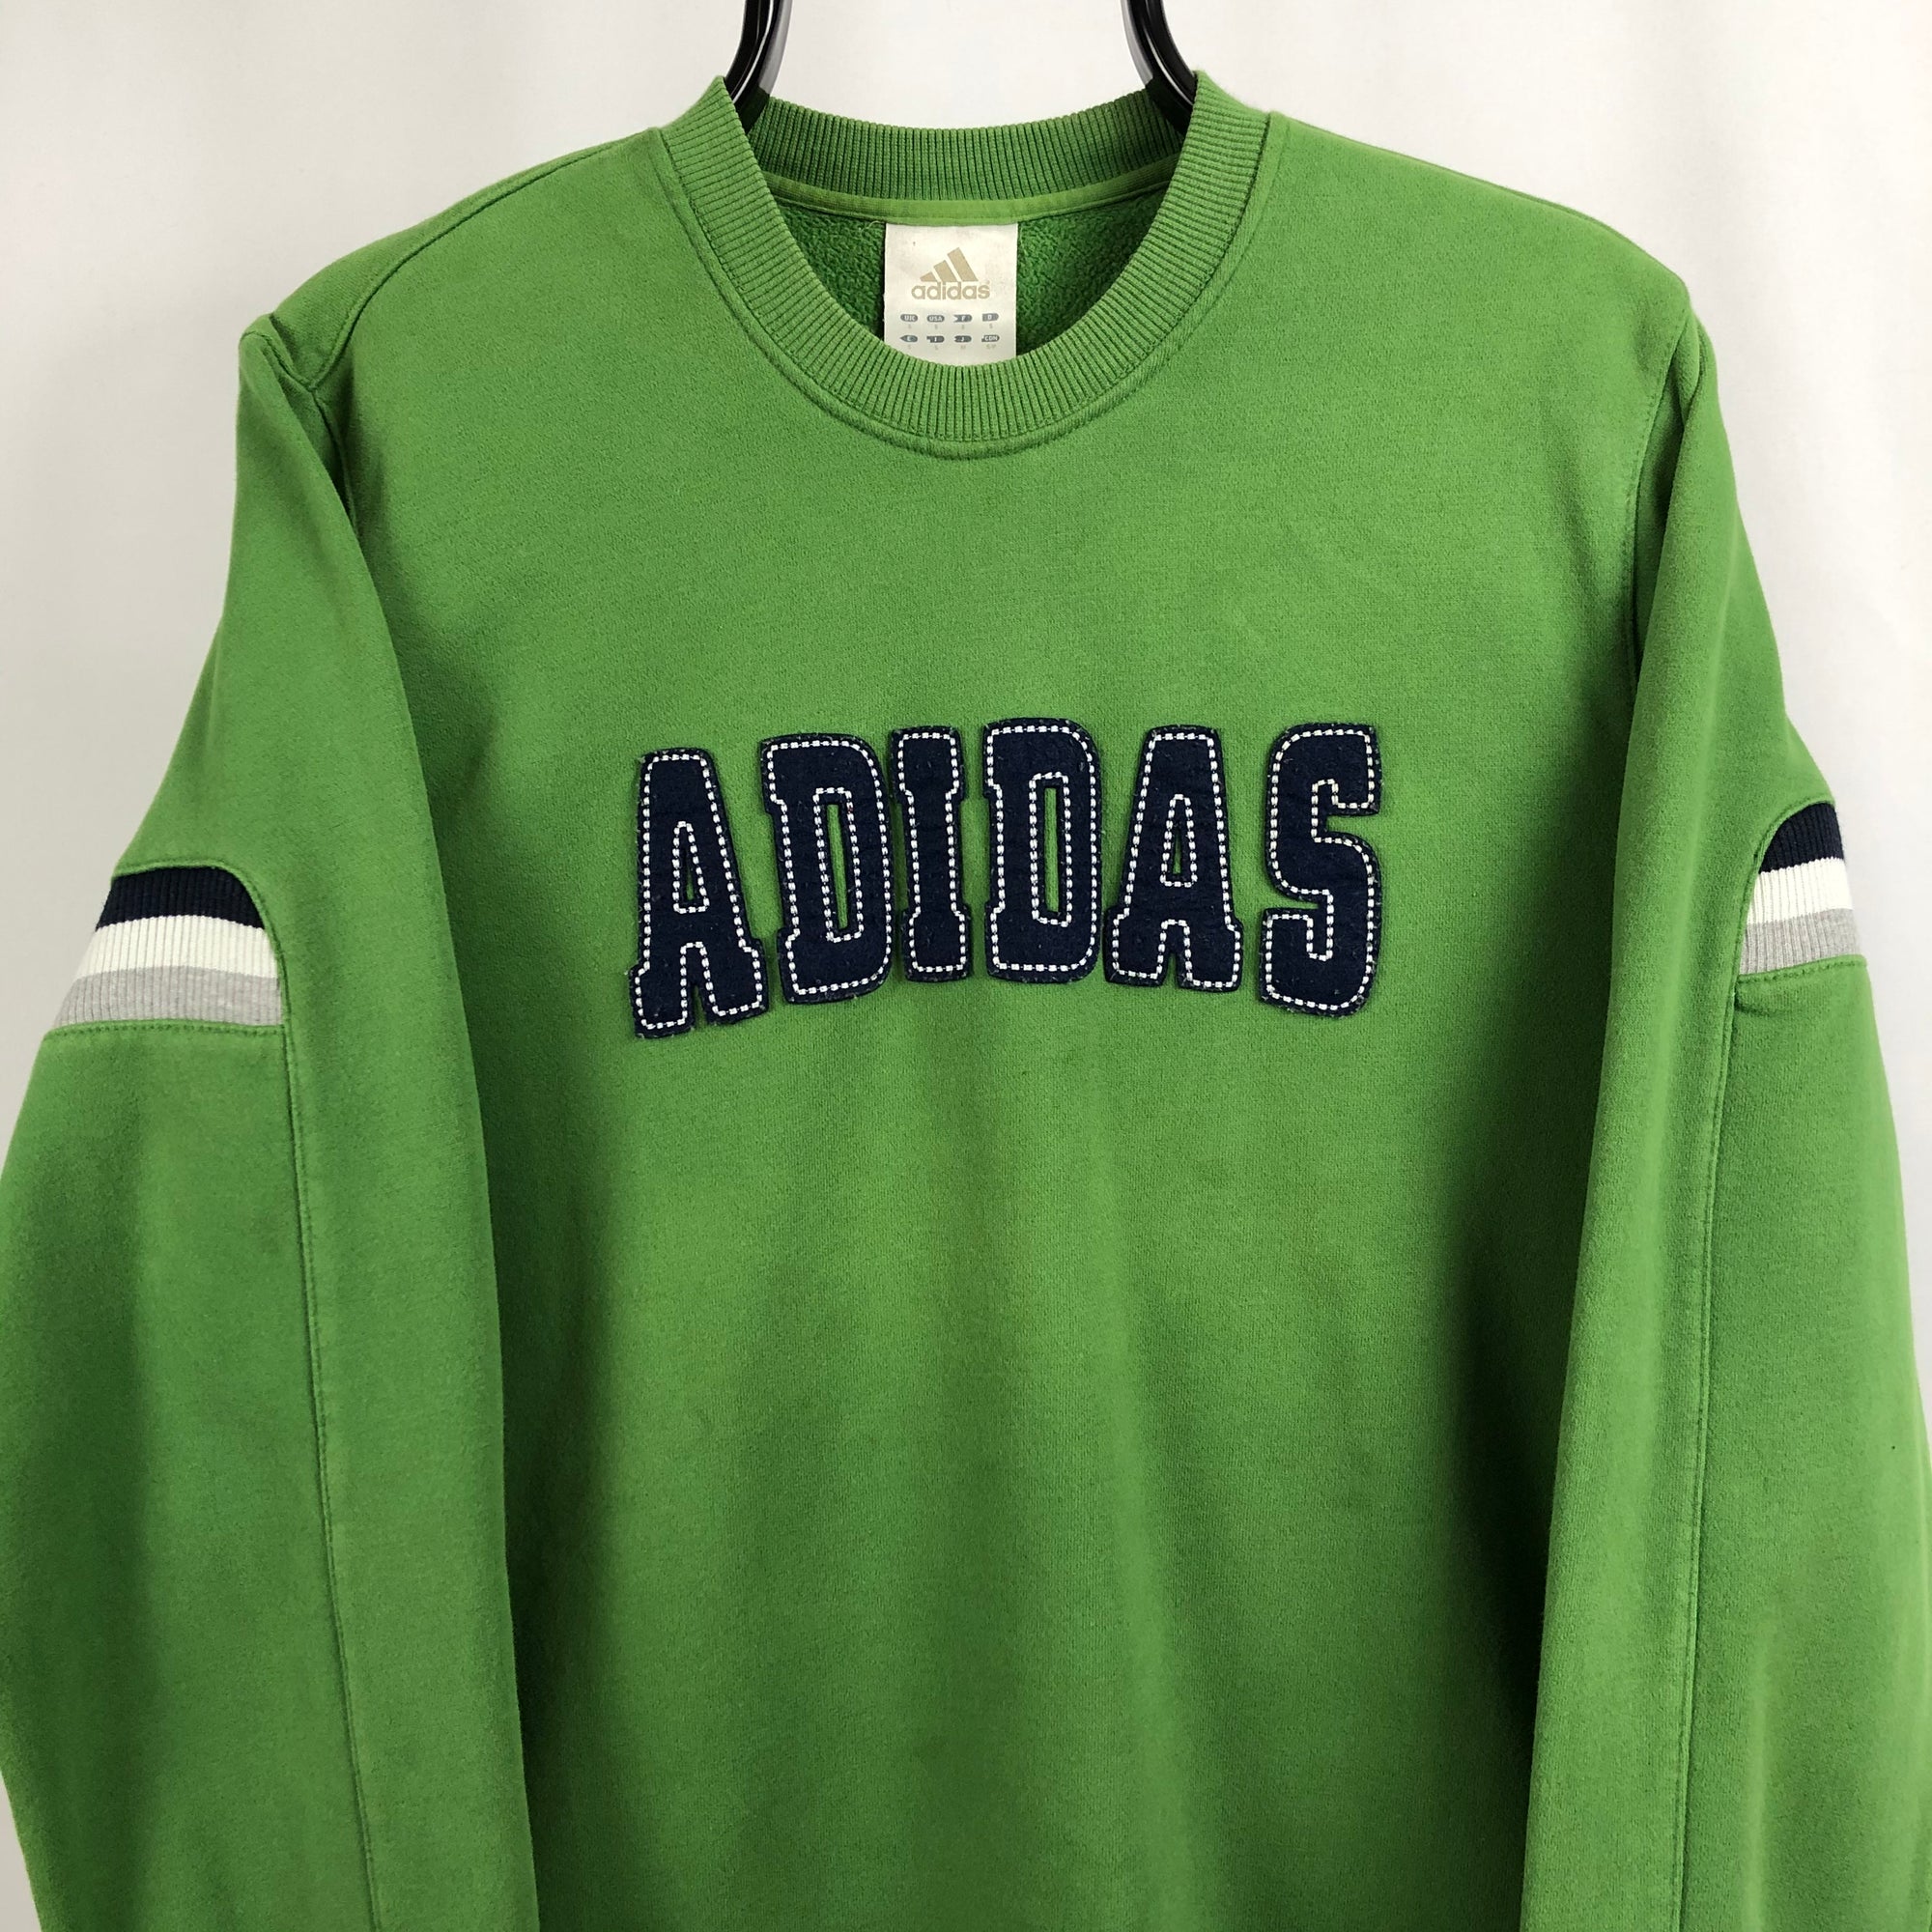 Vintage Adidas Spellout Sweatshirt in Green/Navy - Men's Small/Women's Medium